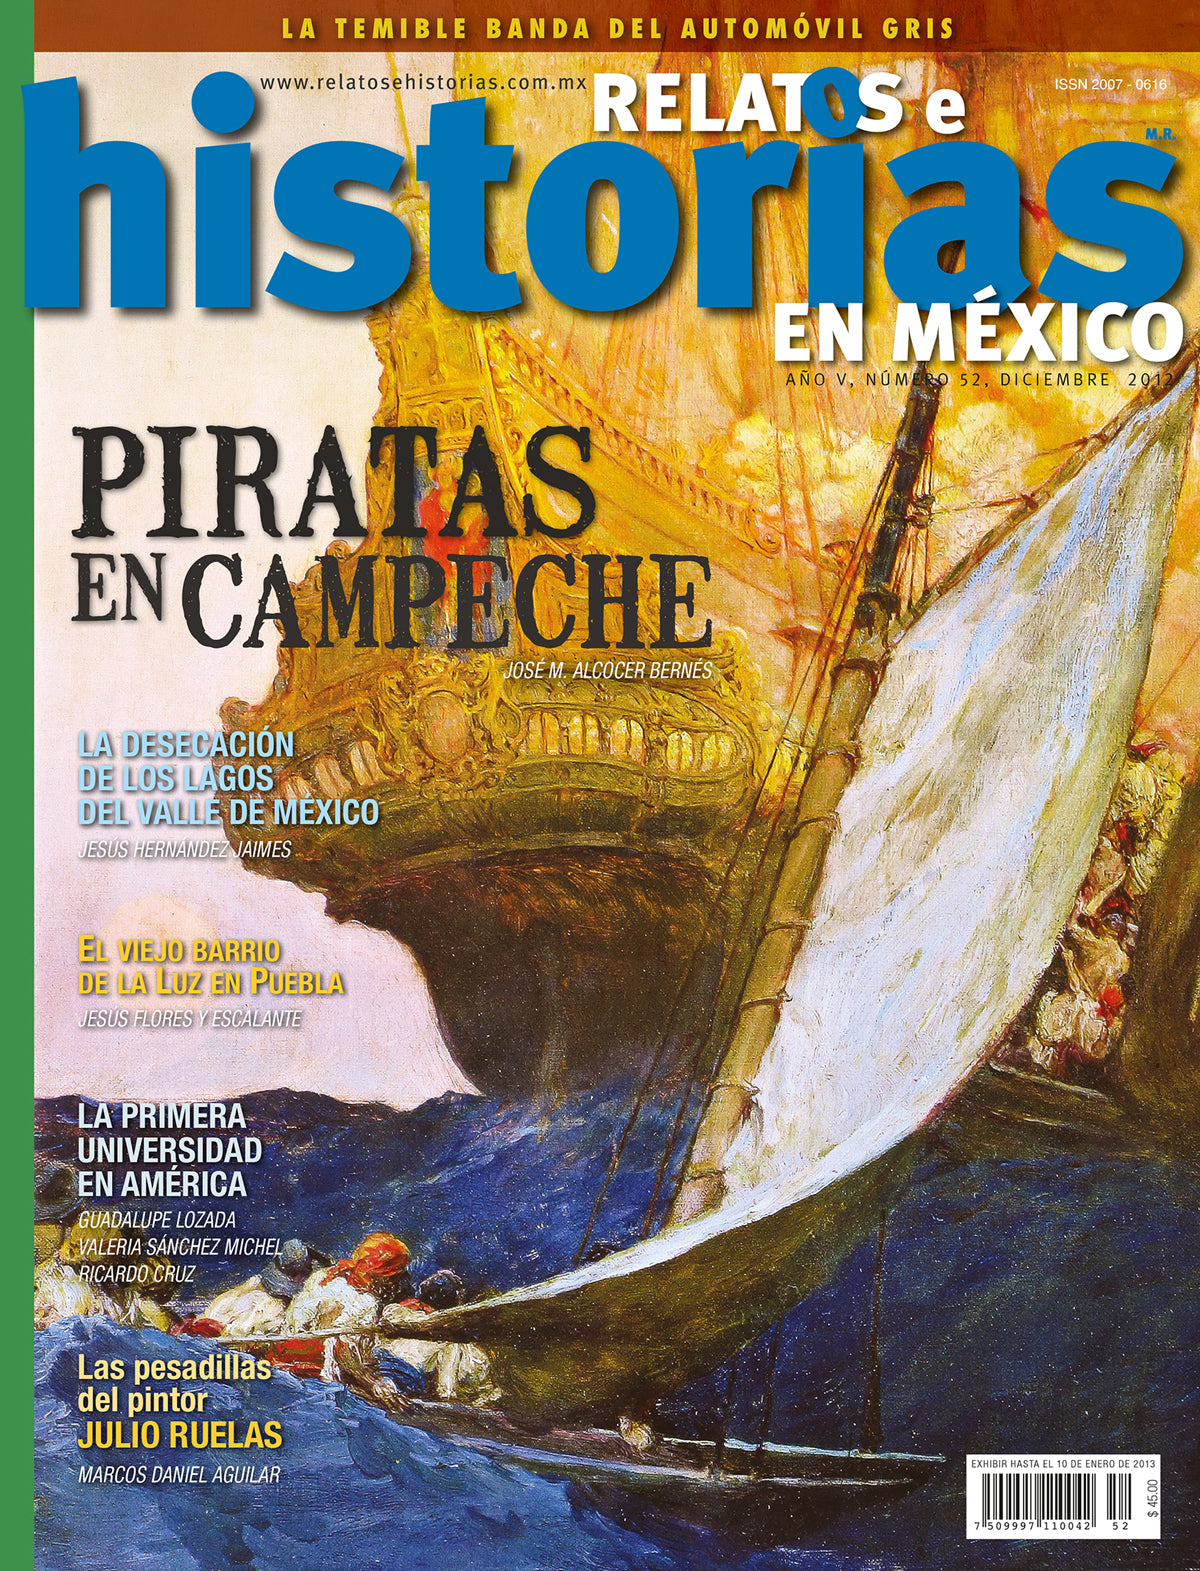 Piratas en Campeche